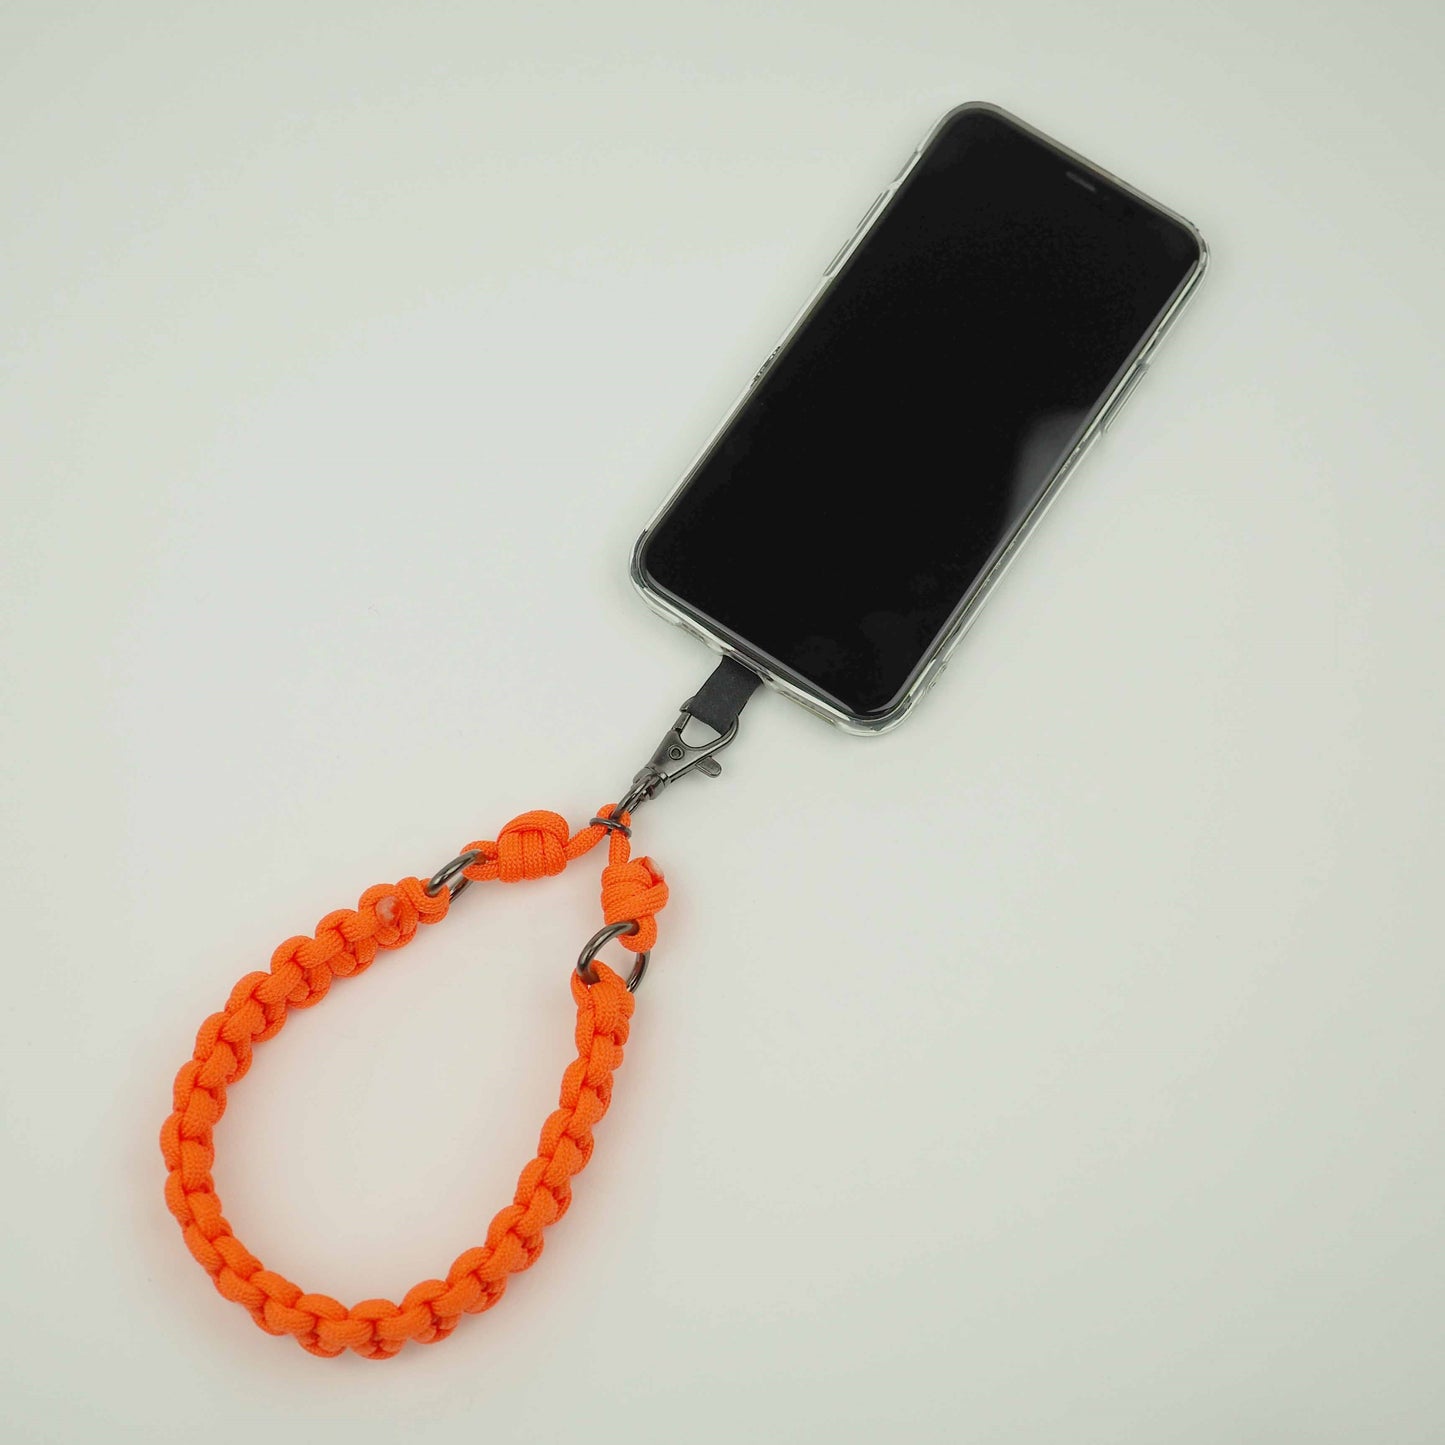 yuzen / Smartphone Strap "Knot 002" Rescue-Orange